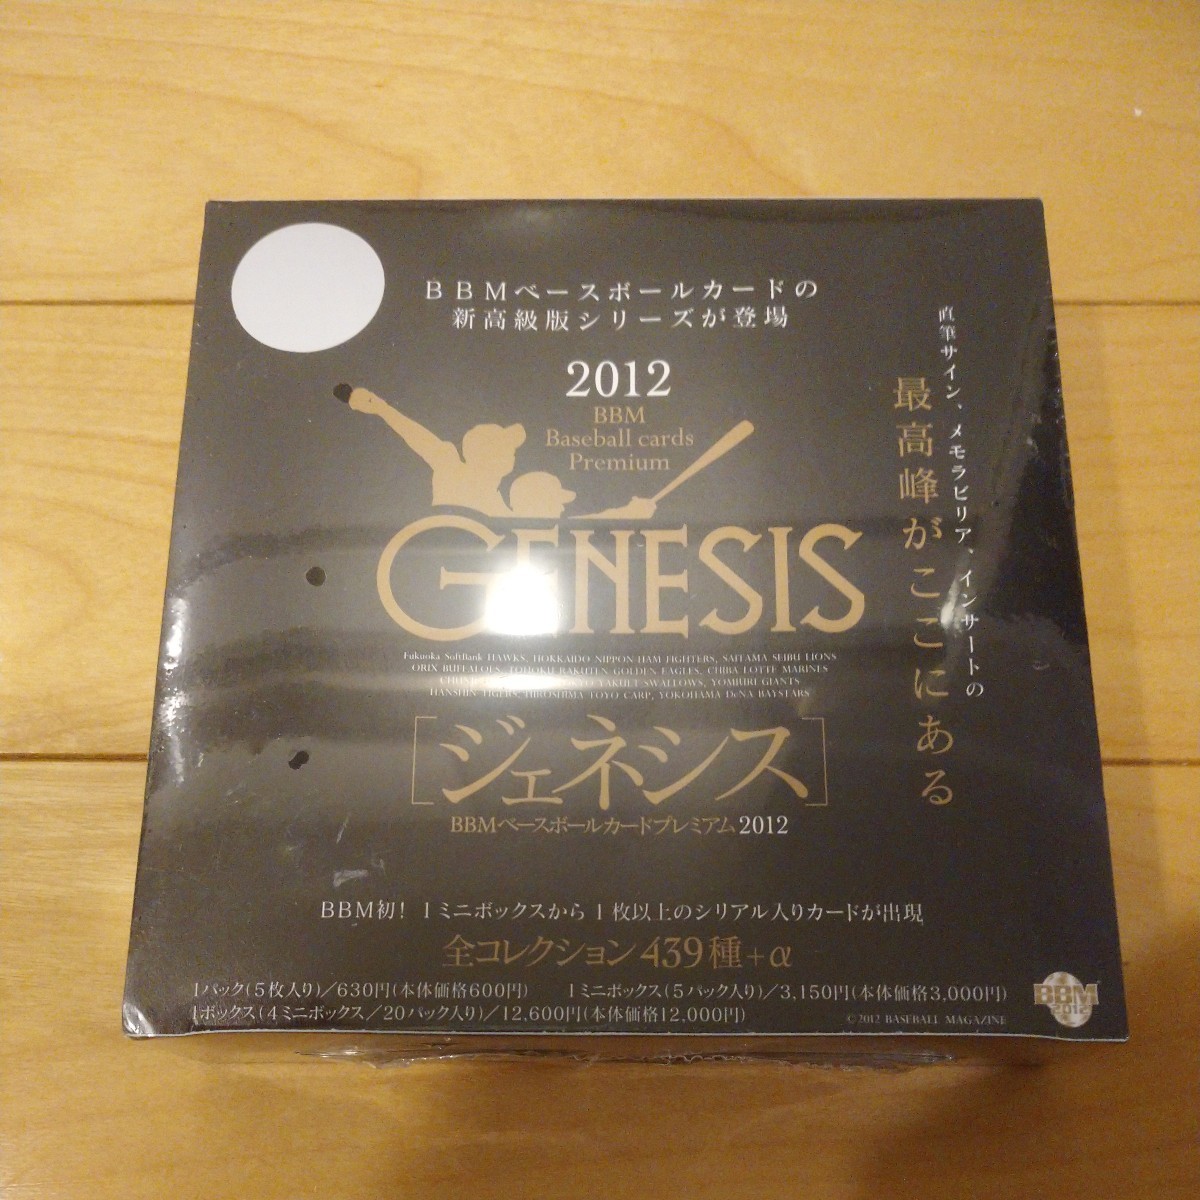 2012 BBM Genesis 未開封 Box